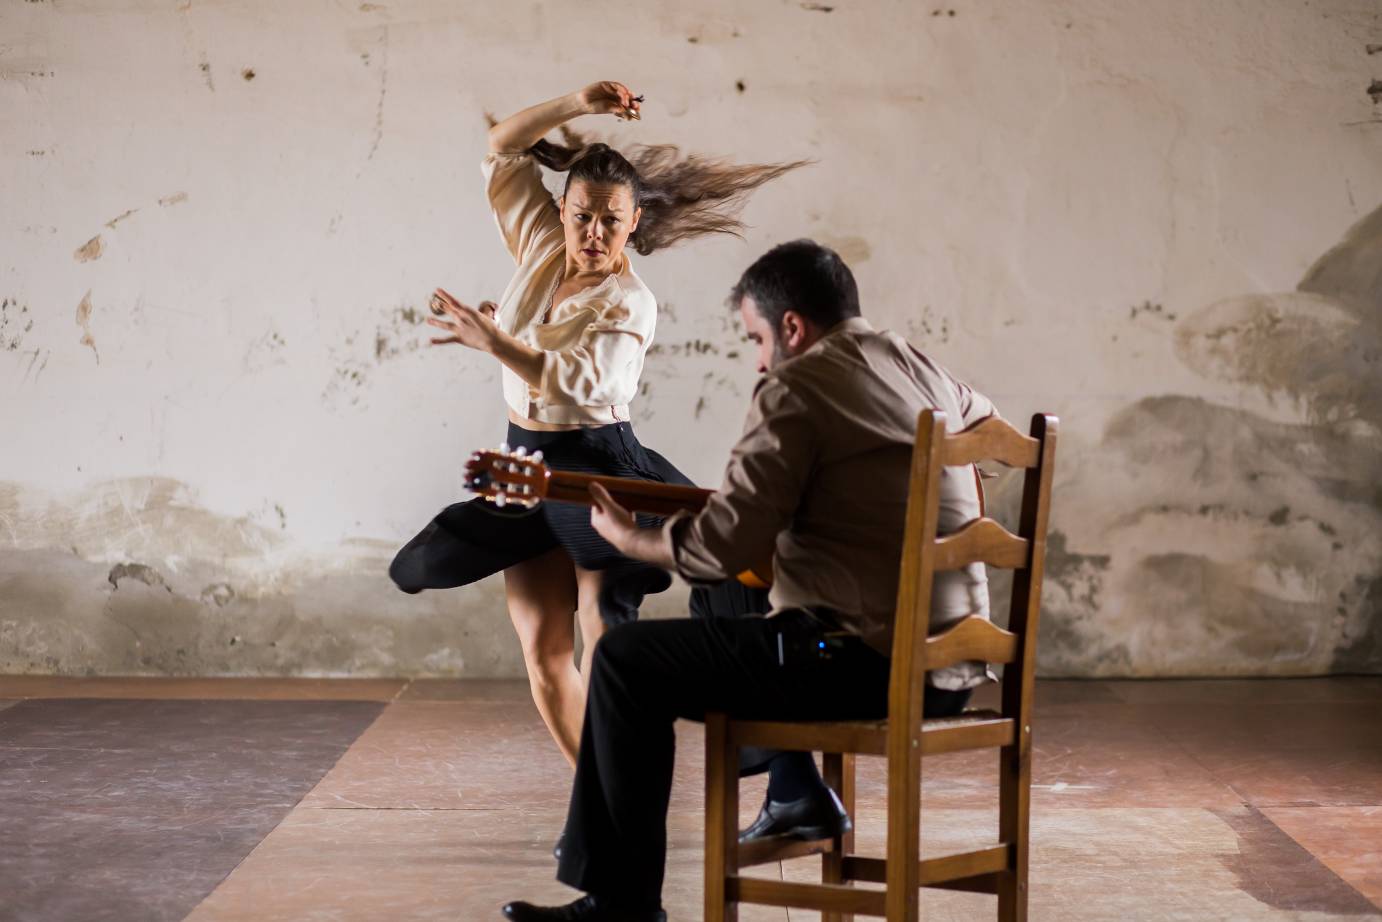 Rocio Molina dances with abandon close to the flamenco guitarist